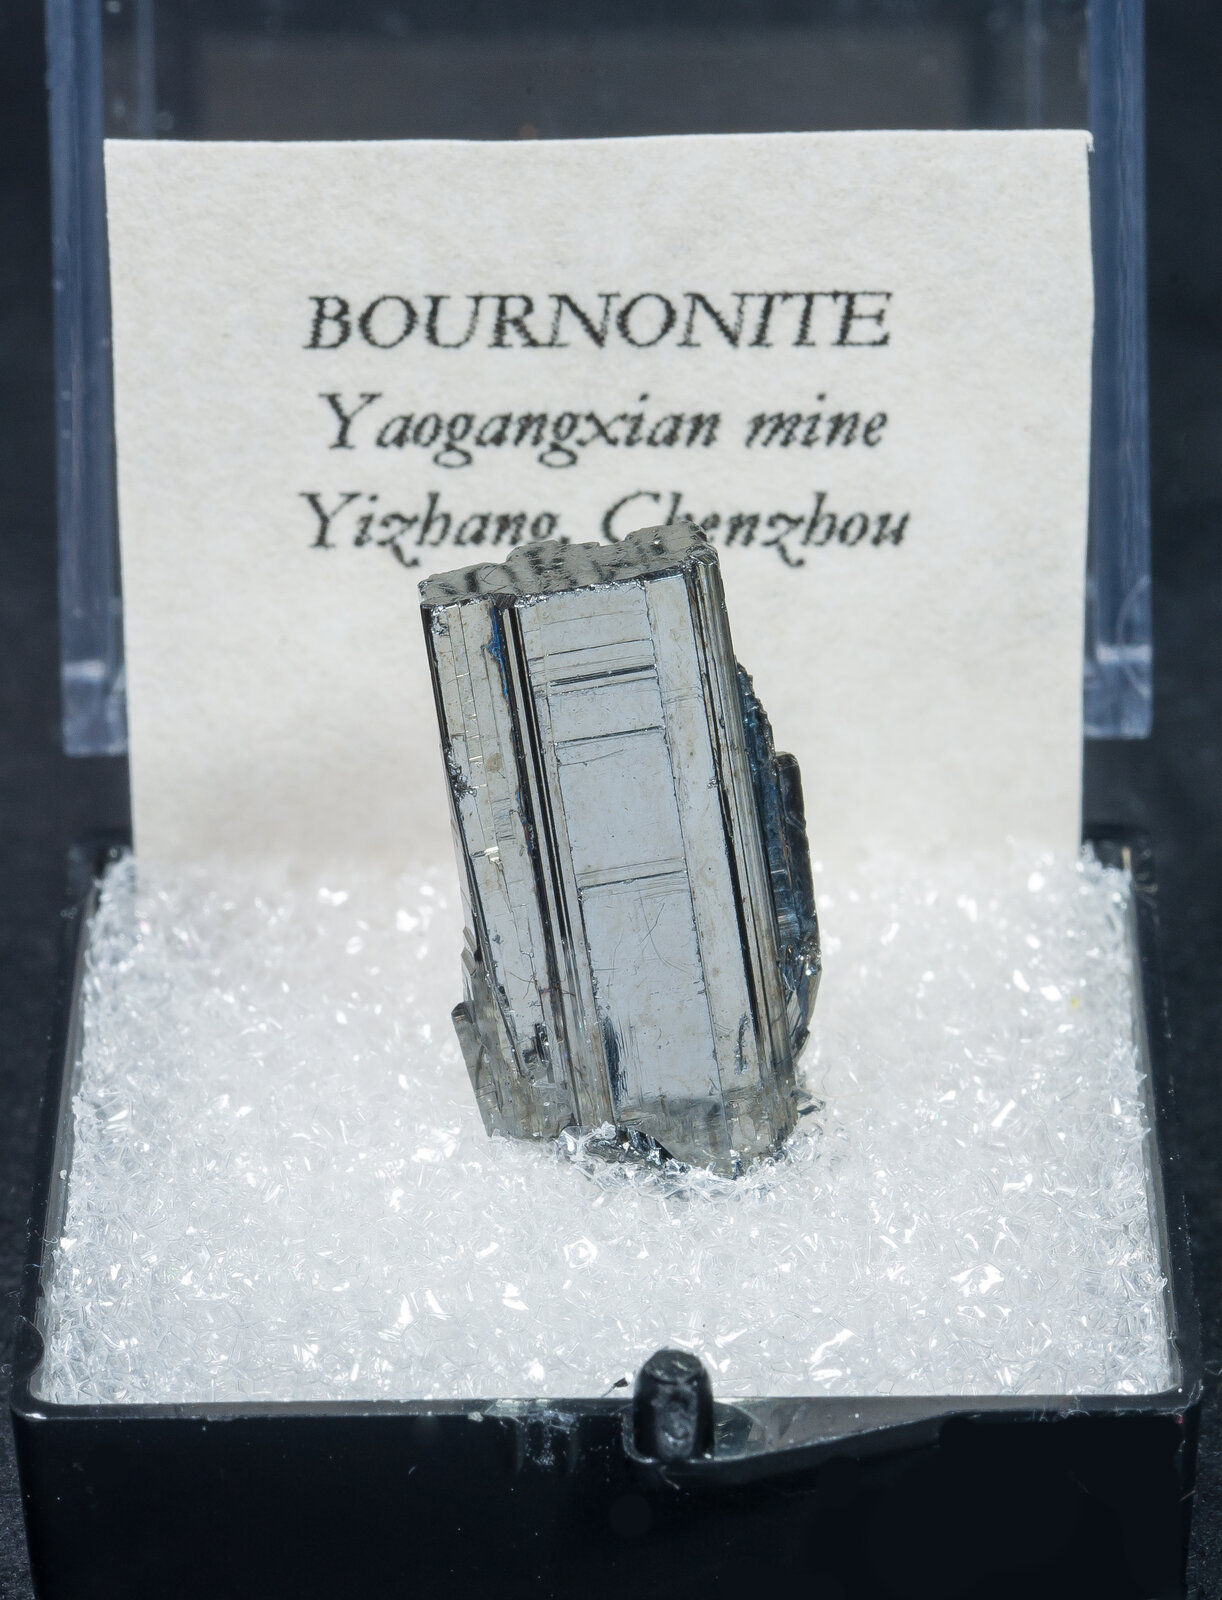 specimens/s_imagesAN1/Bournonite-TH26AN1f1.jpg